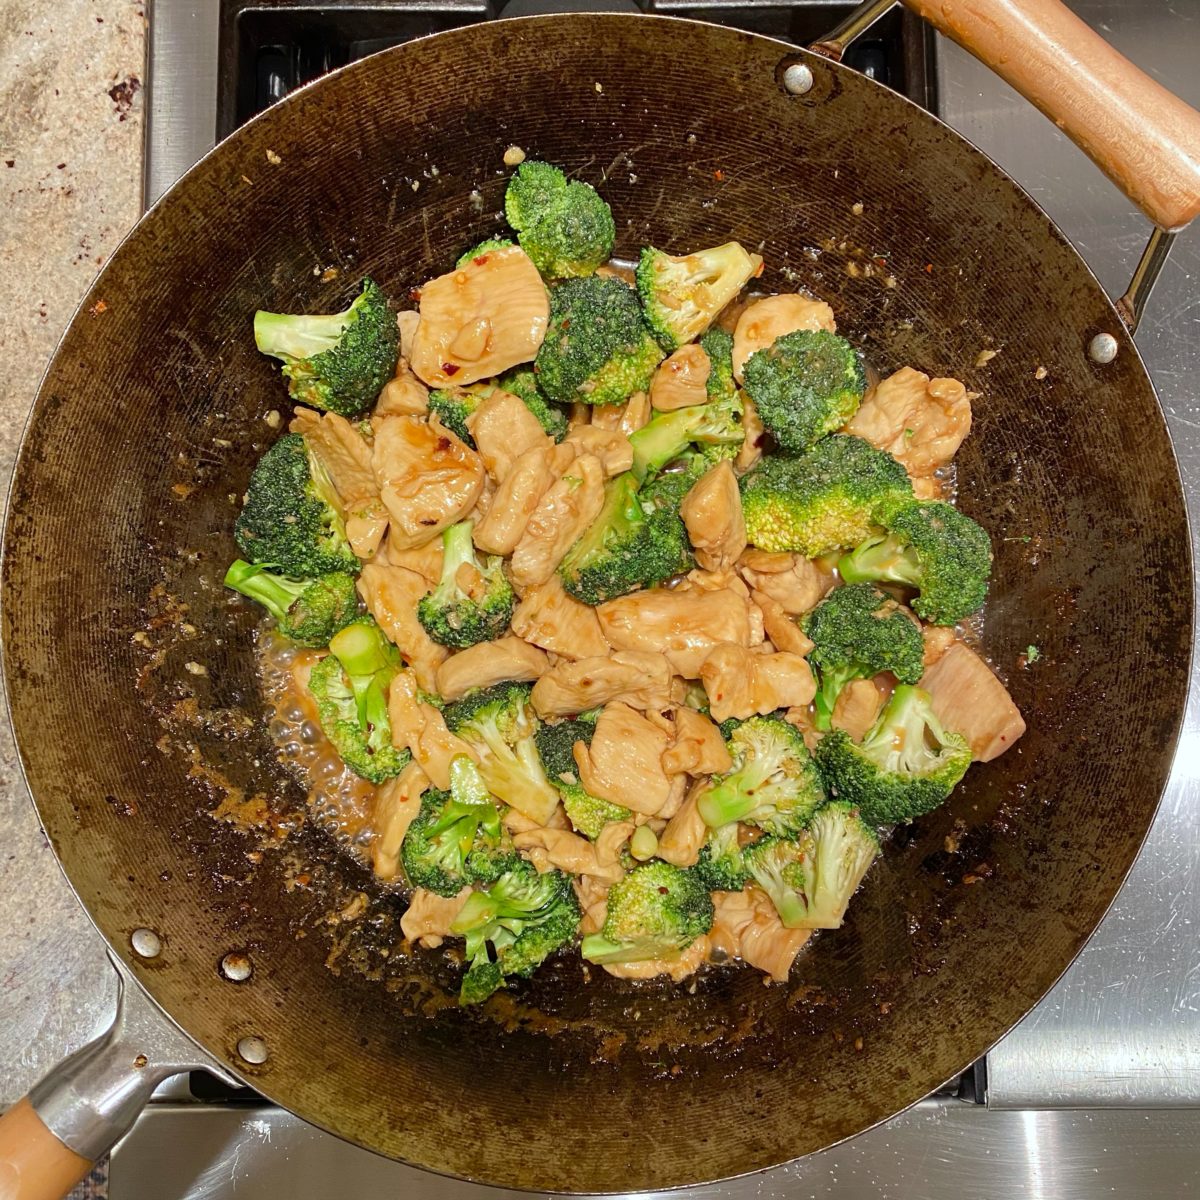 Honey garlic chicken with broccoli in a wok.